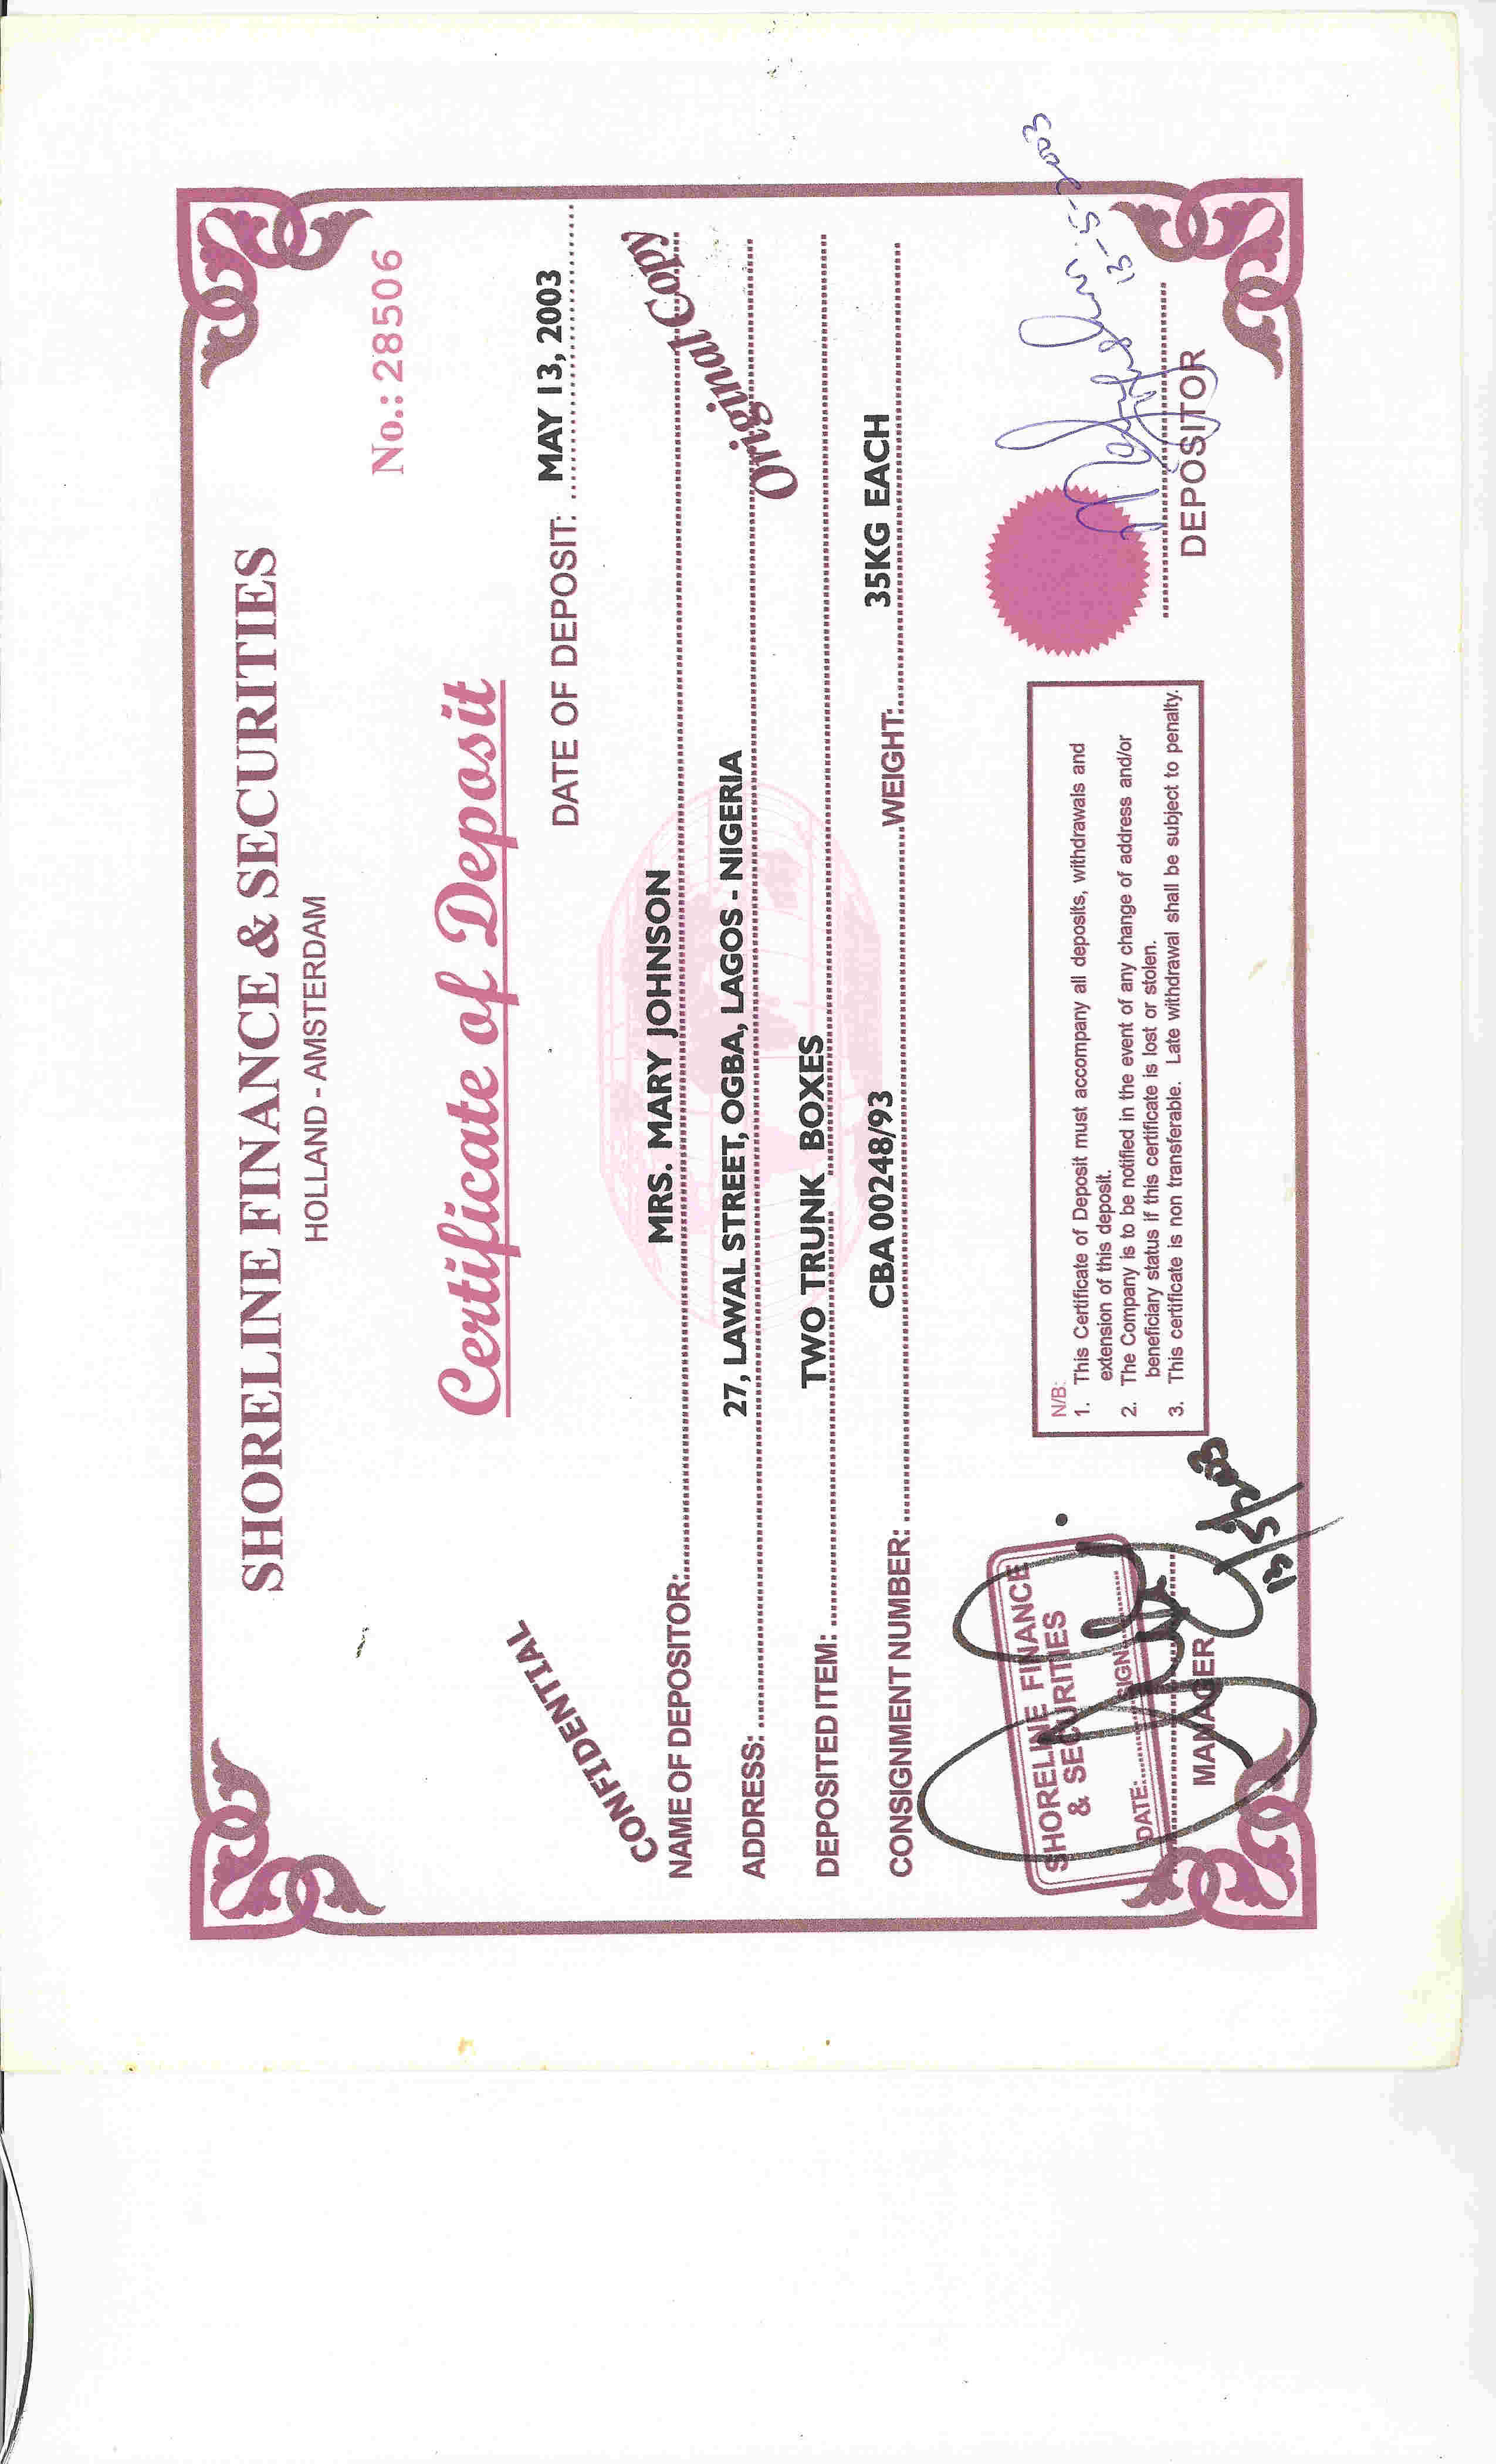 The fake certificate of deposit